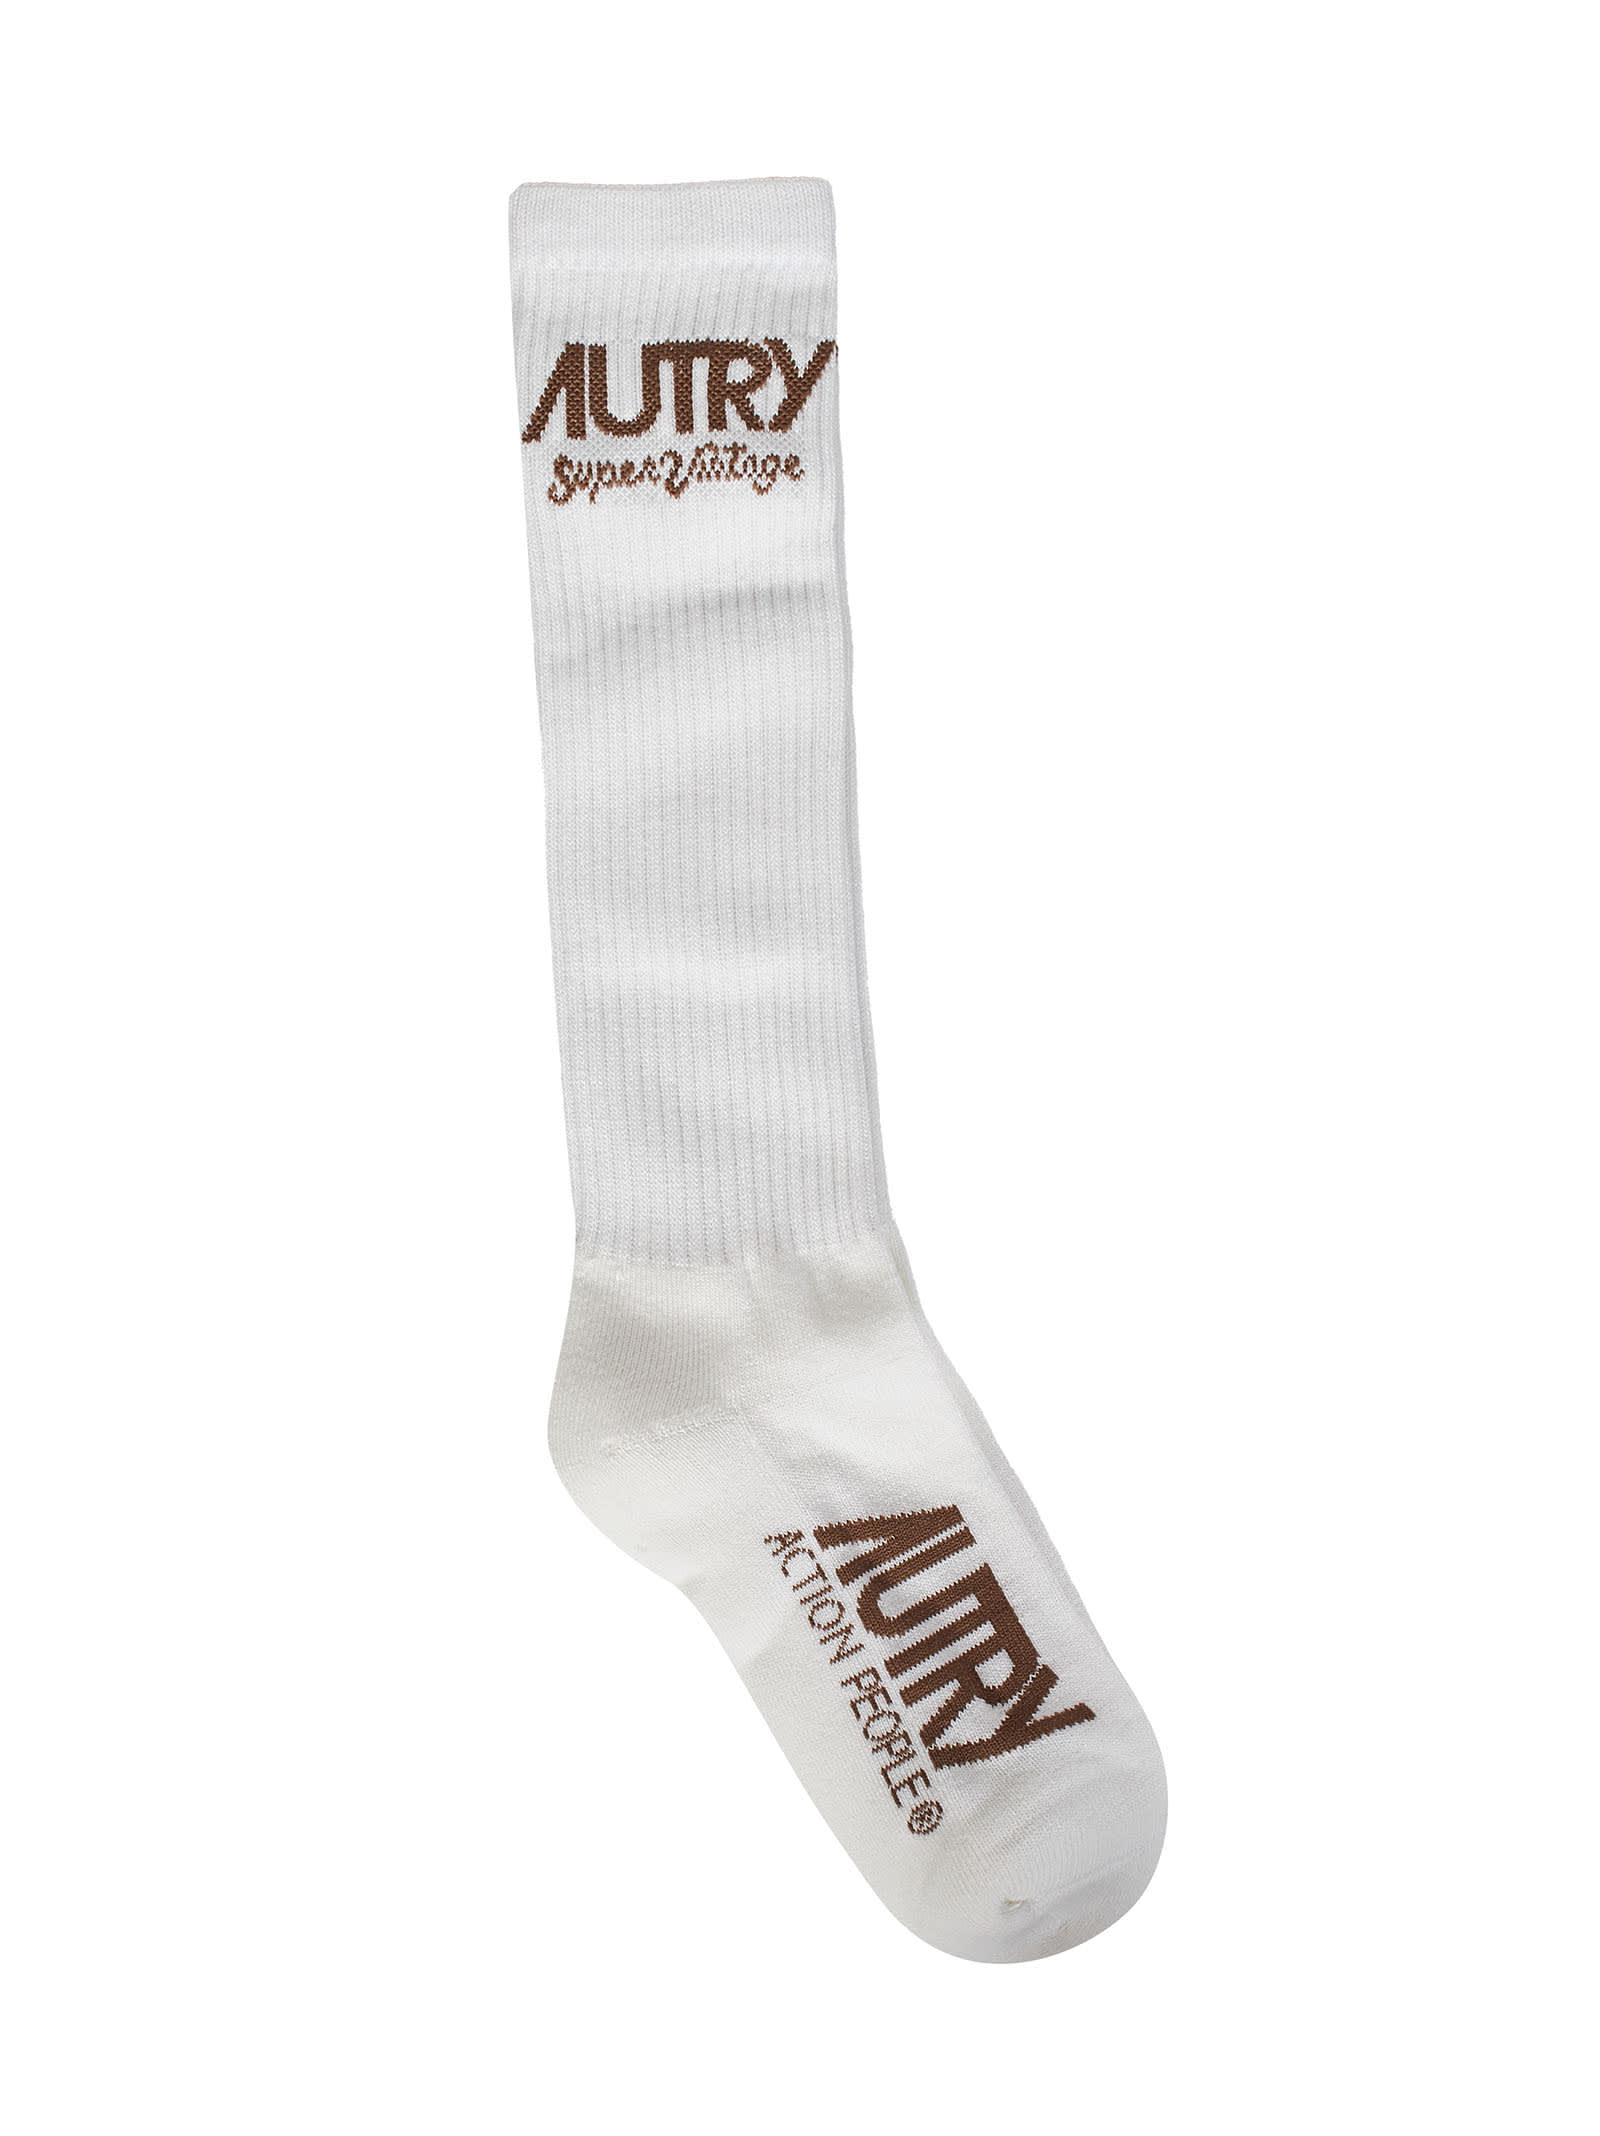 Autry Supervintage Socks